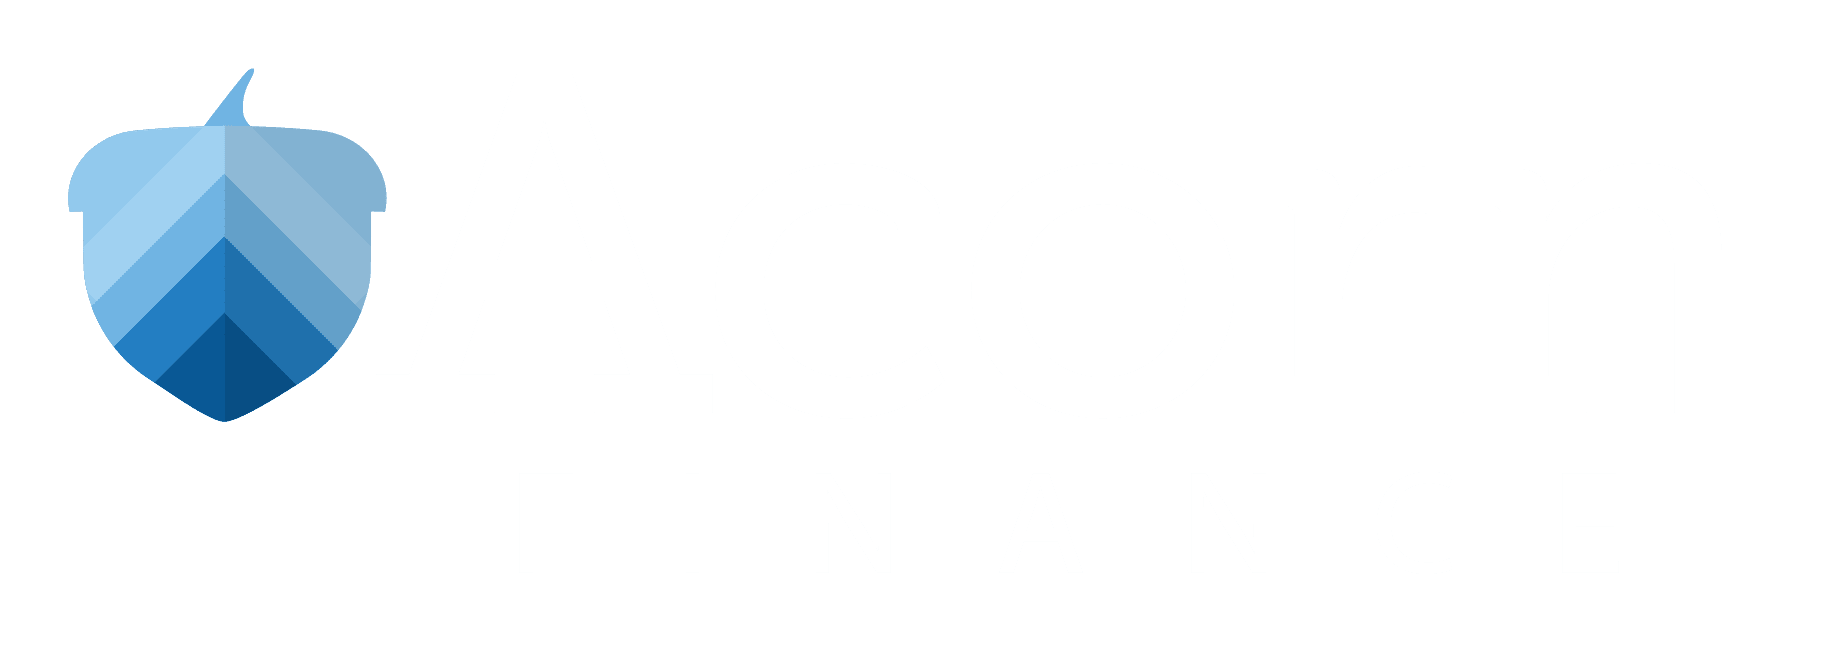 Acorn finance logo compressed 01